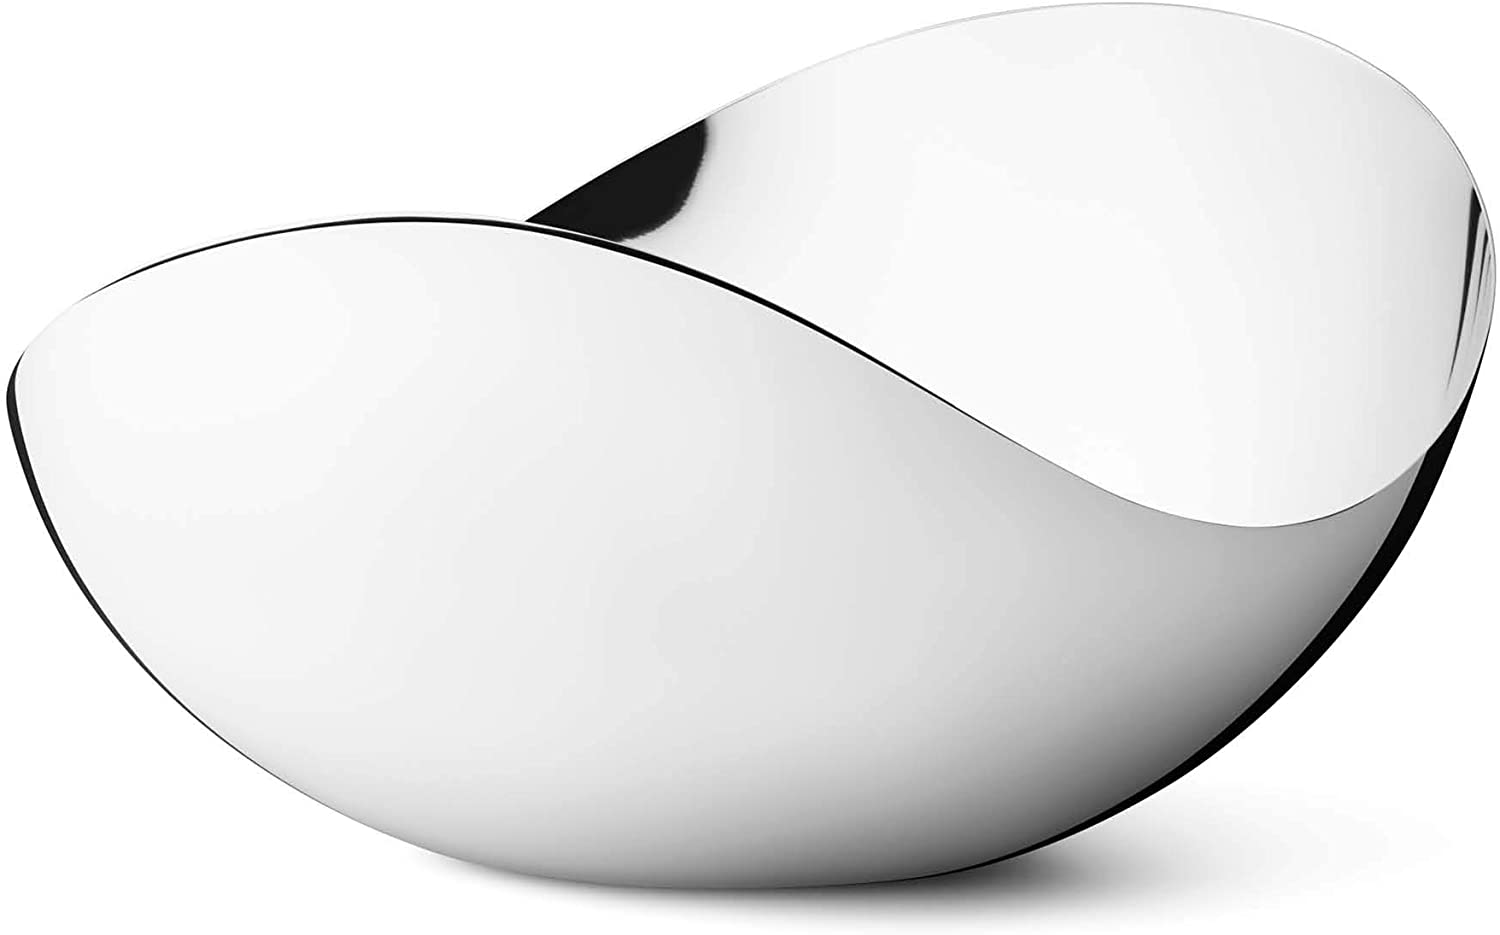 Georg Jensen Large serving bowl, stainless steel, 15.3 x 27.8 x 20.6 cm